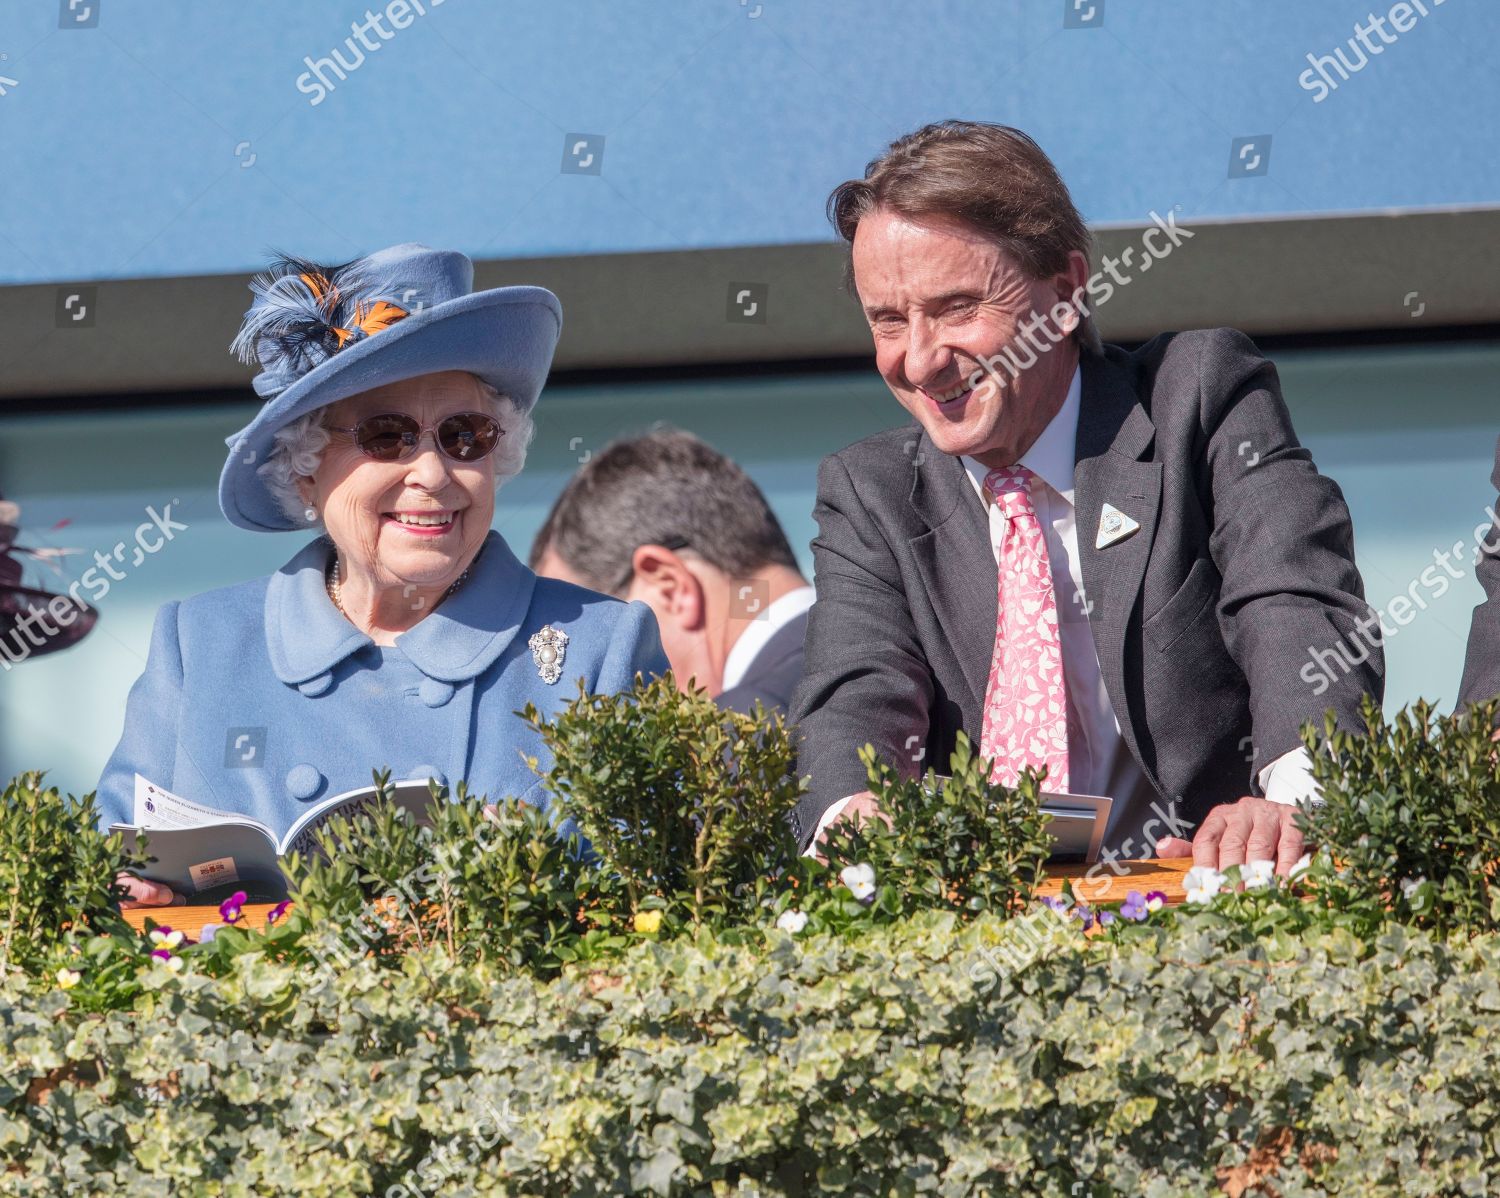 queen-elizabeth-ii-attends-the-qipco-british-champions-day-at-ascot-racecourse-berkshire-uk-shutterstock-editorial-9938969g.jpg